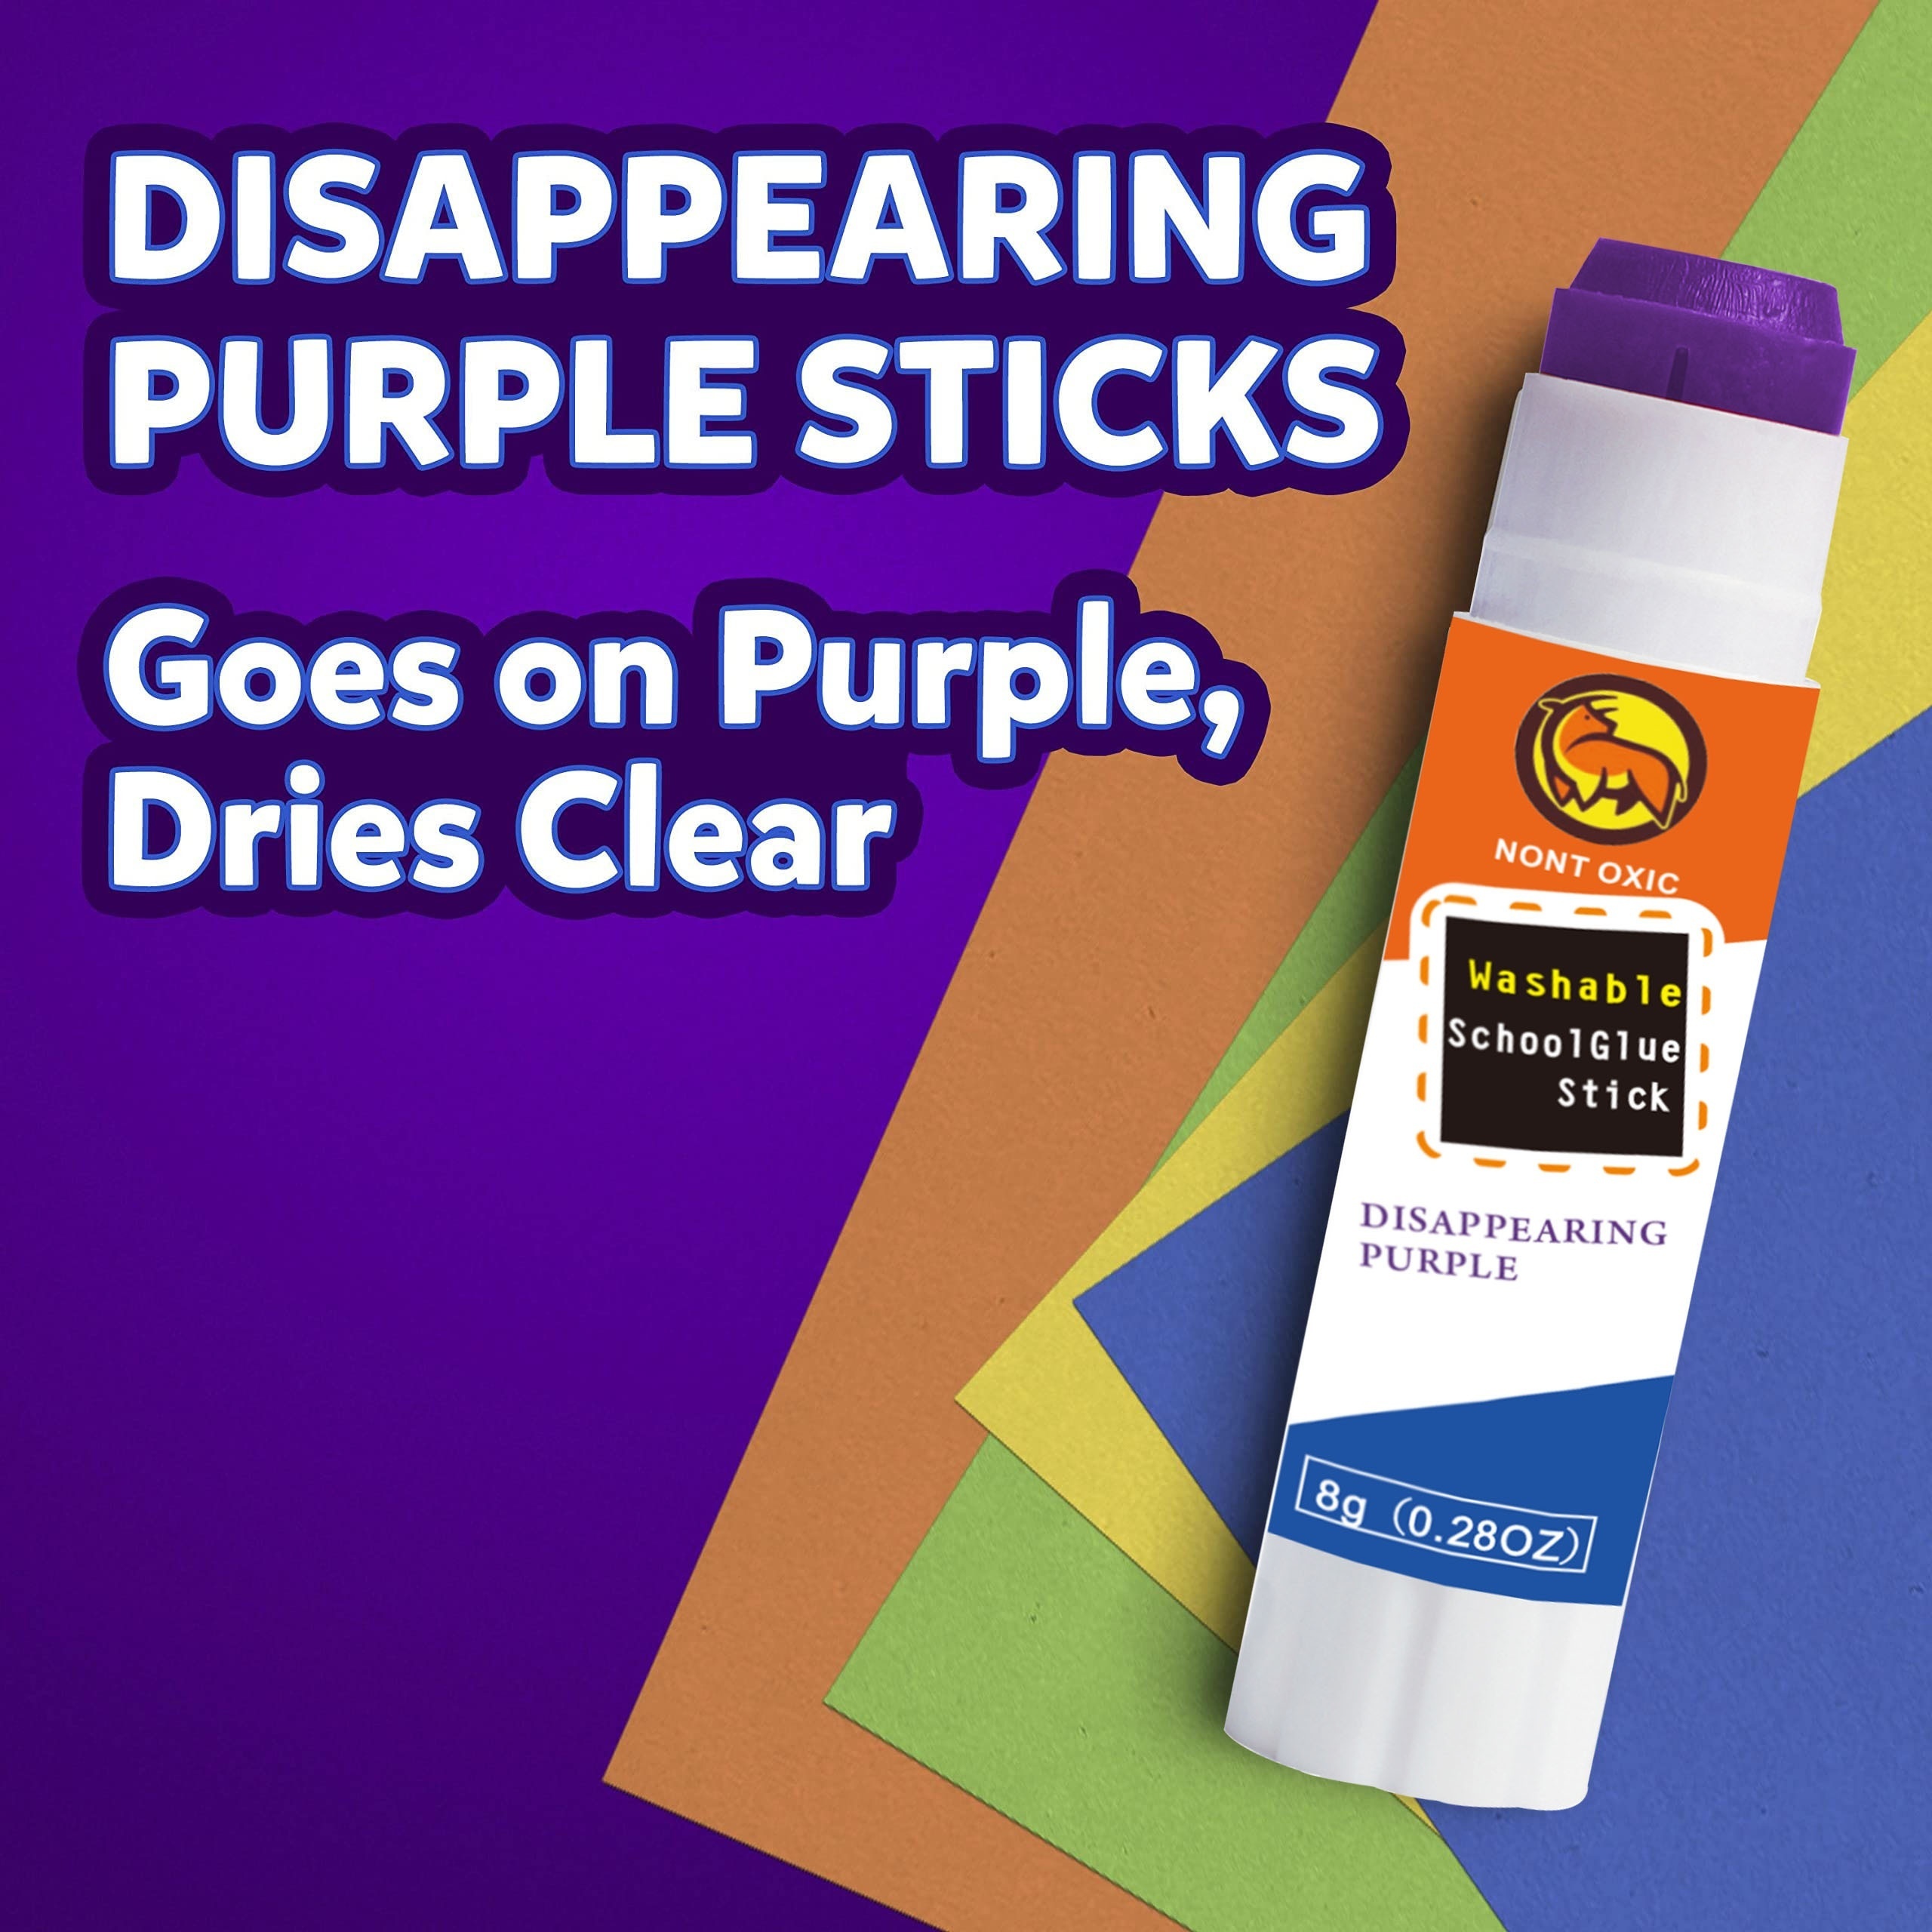 Elmer's Disappearing Purple Spray Adhesive 4 oz (118ml)